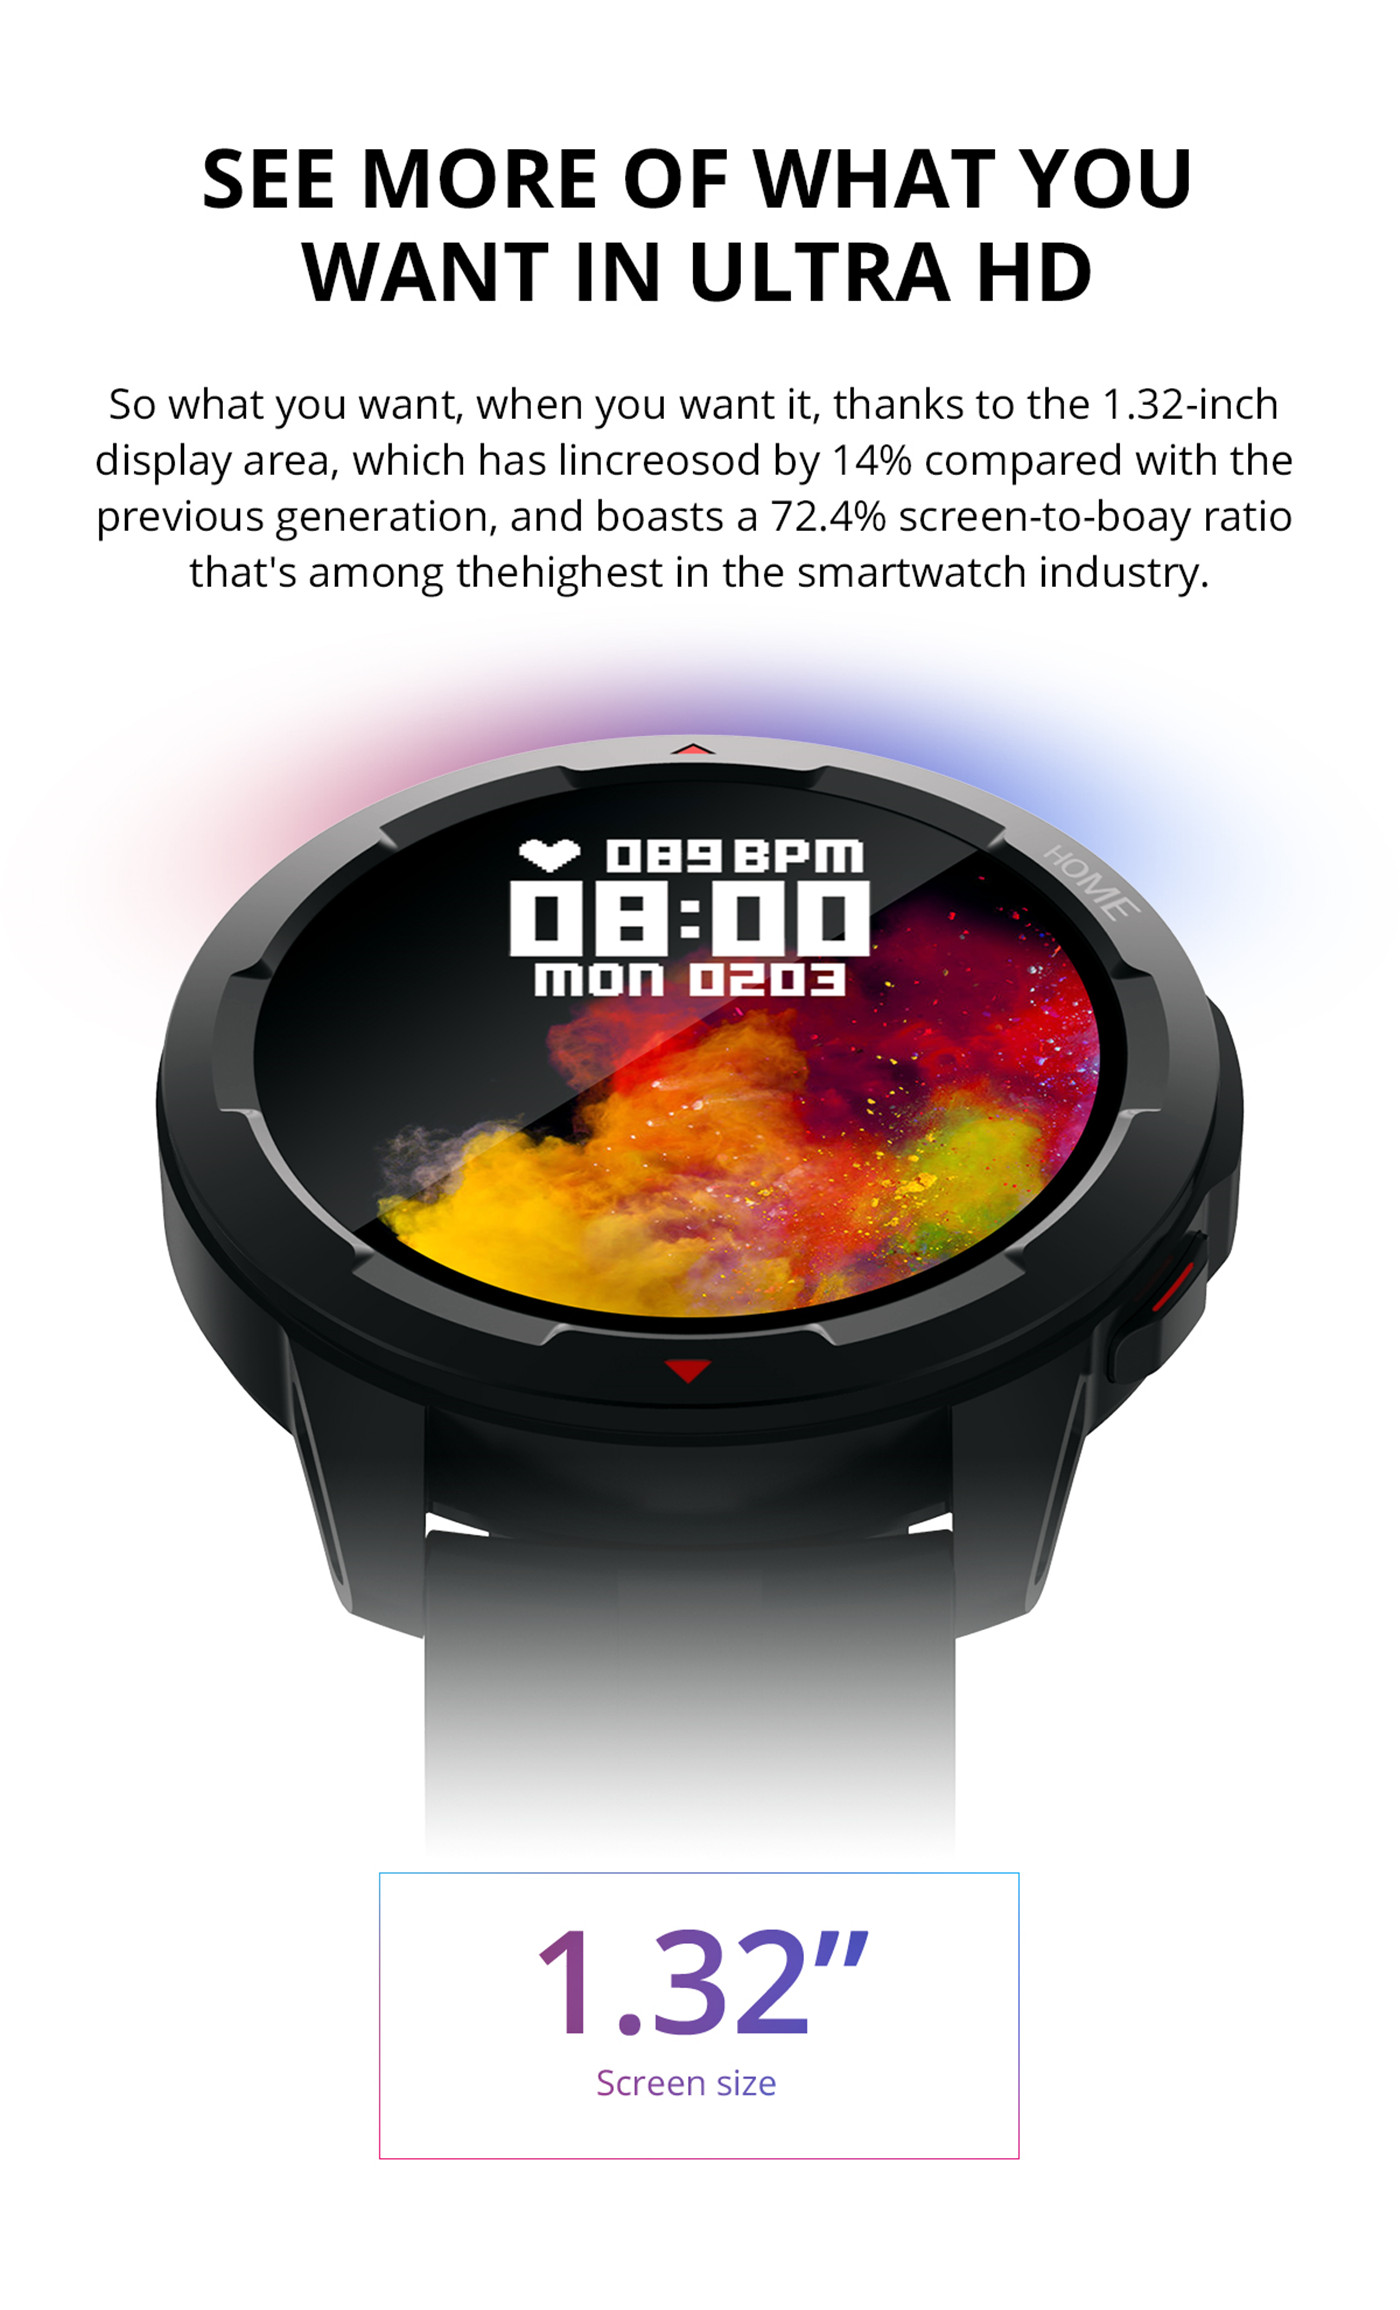 COLMI M40 Smartwatch мардон 1.32 дюйм 360360 HD экрани занги Smart Watch занон IP67 обногузар (4)